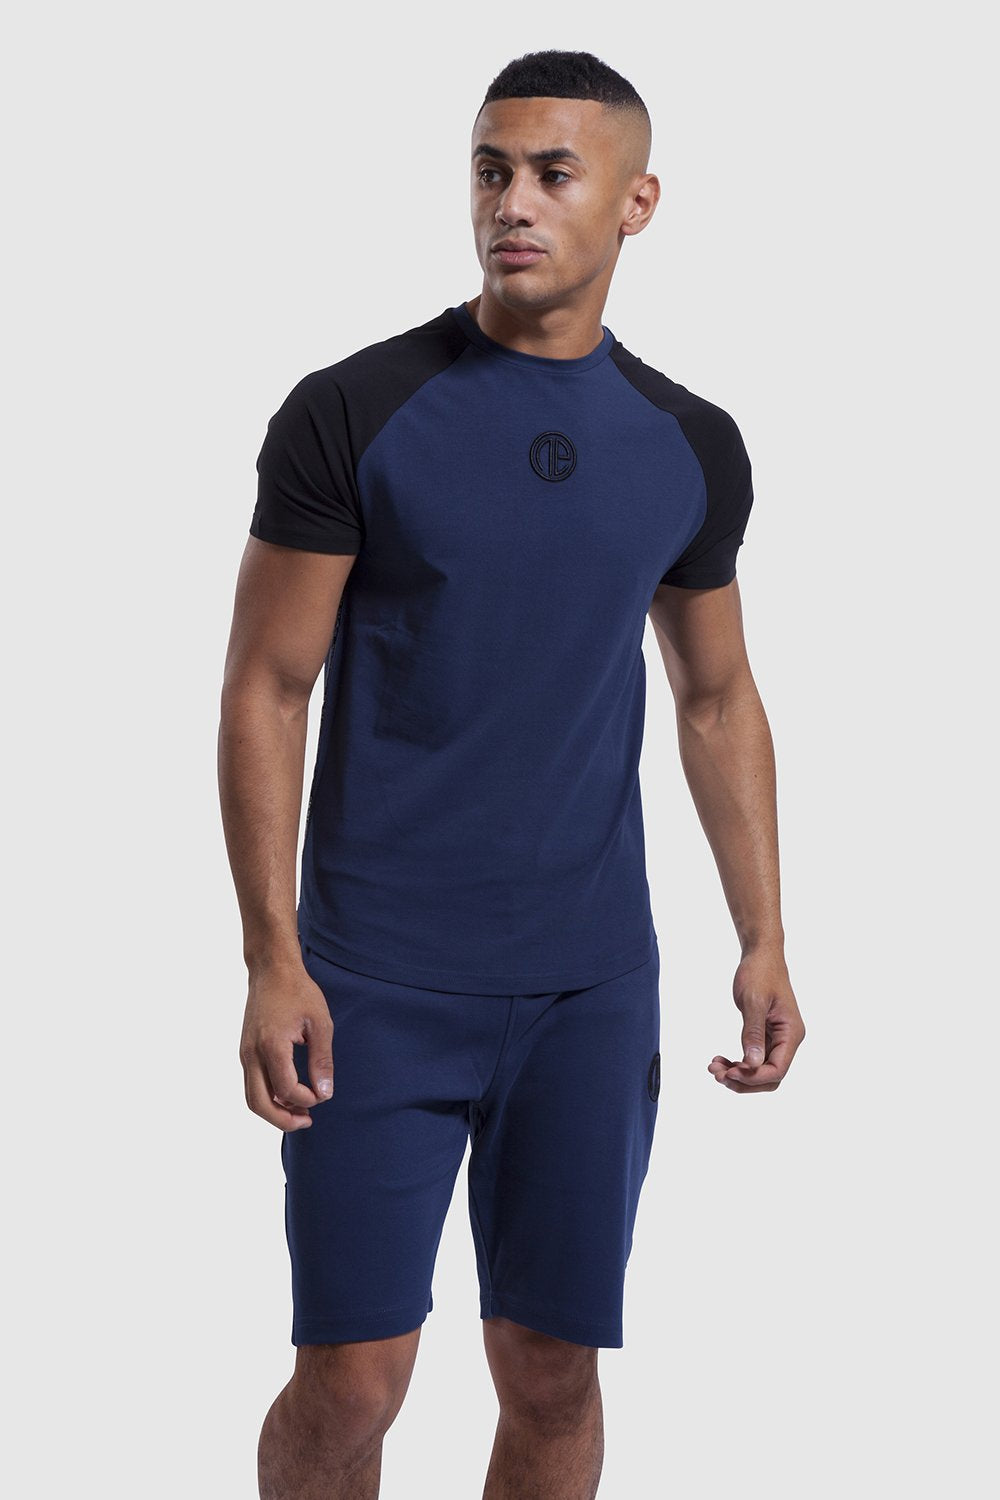 Mens navy gym t-shirt & matching shorts